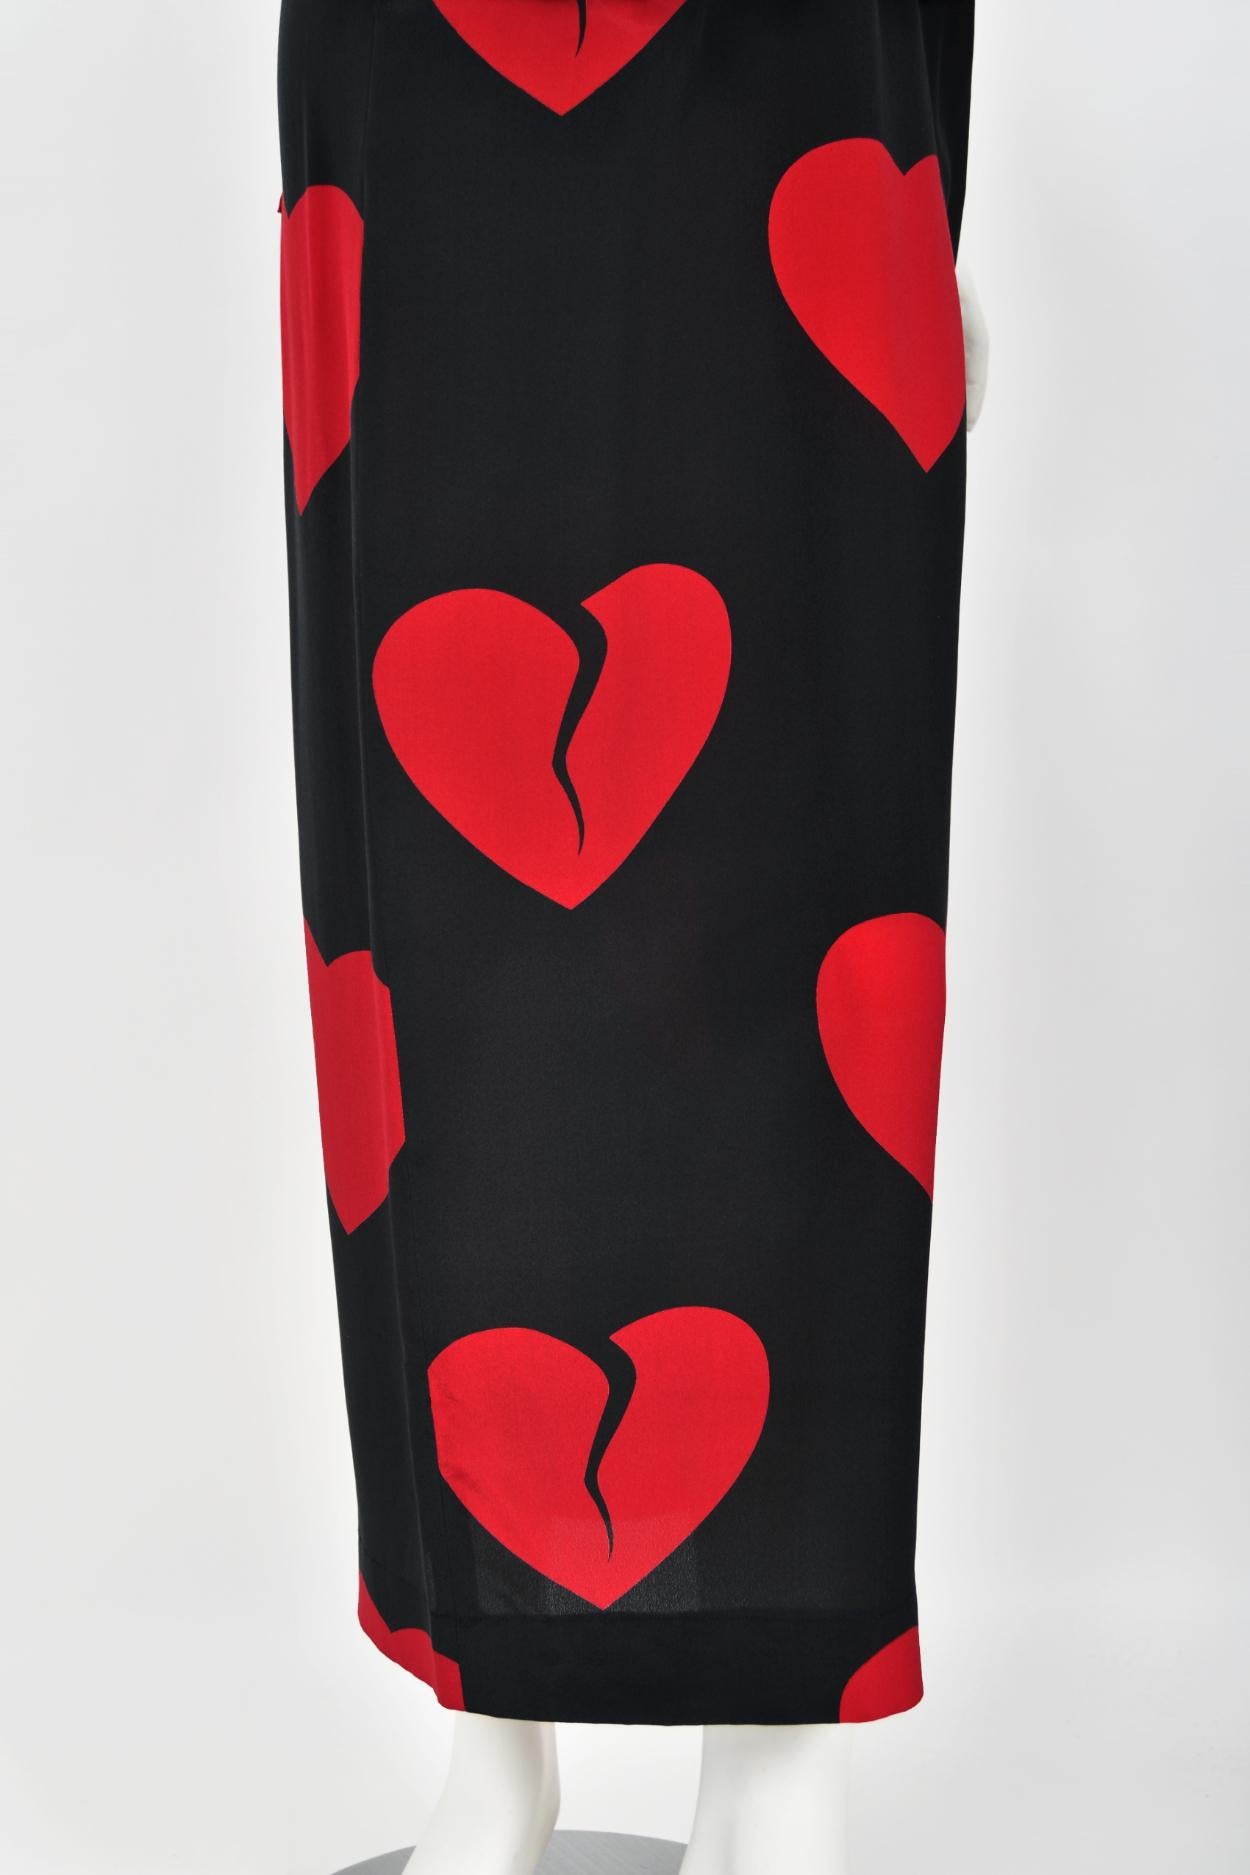 Robe convertible Moschino Couture documentée « Heartbreaker » en soie imprimée, 1994  en vente 5